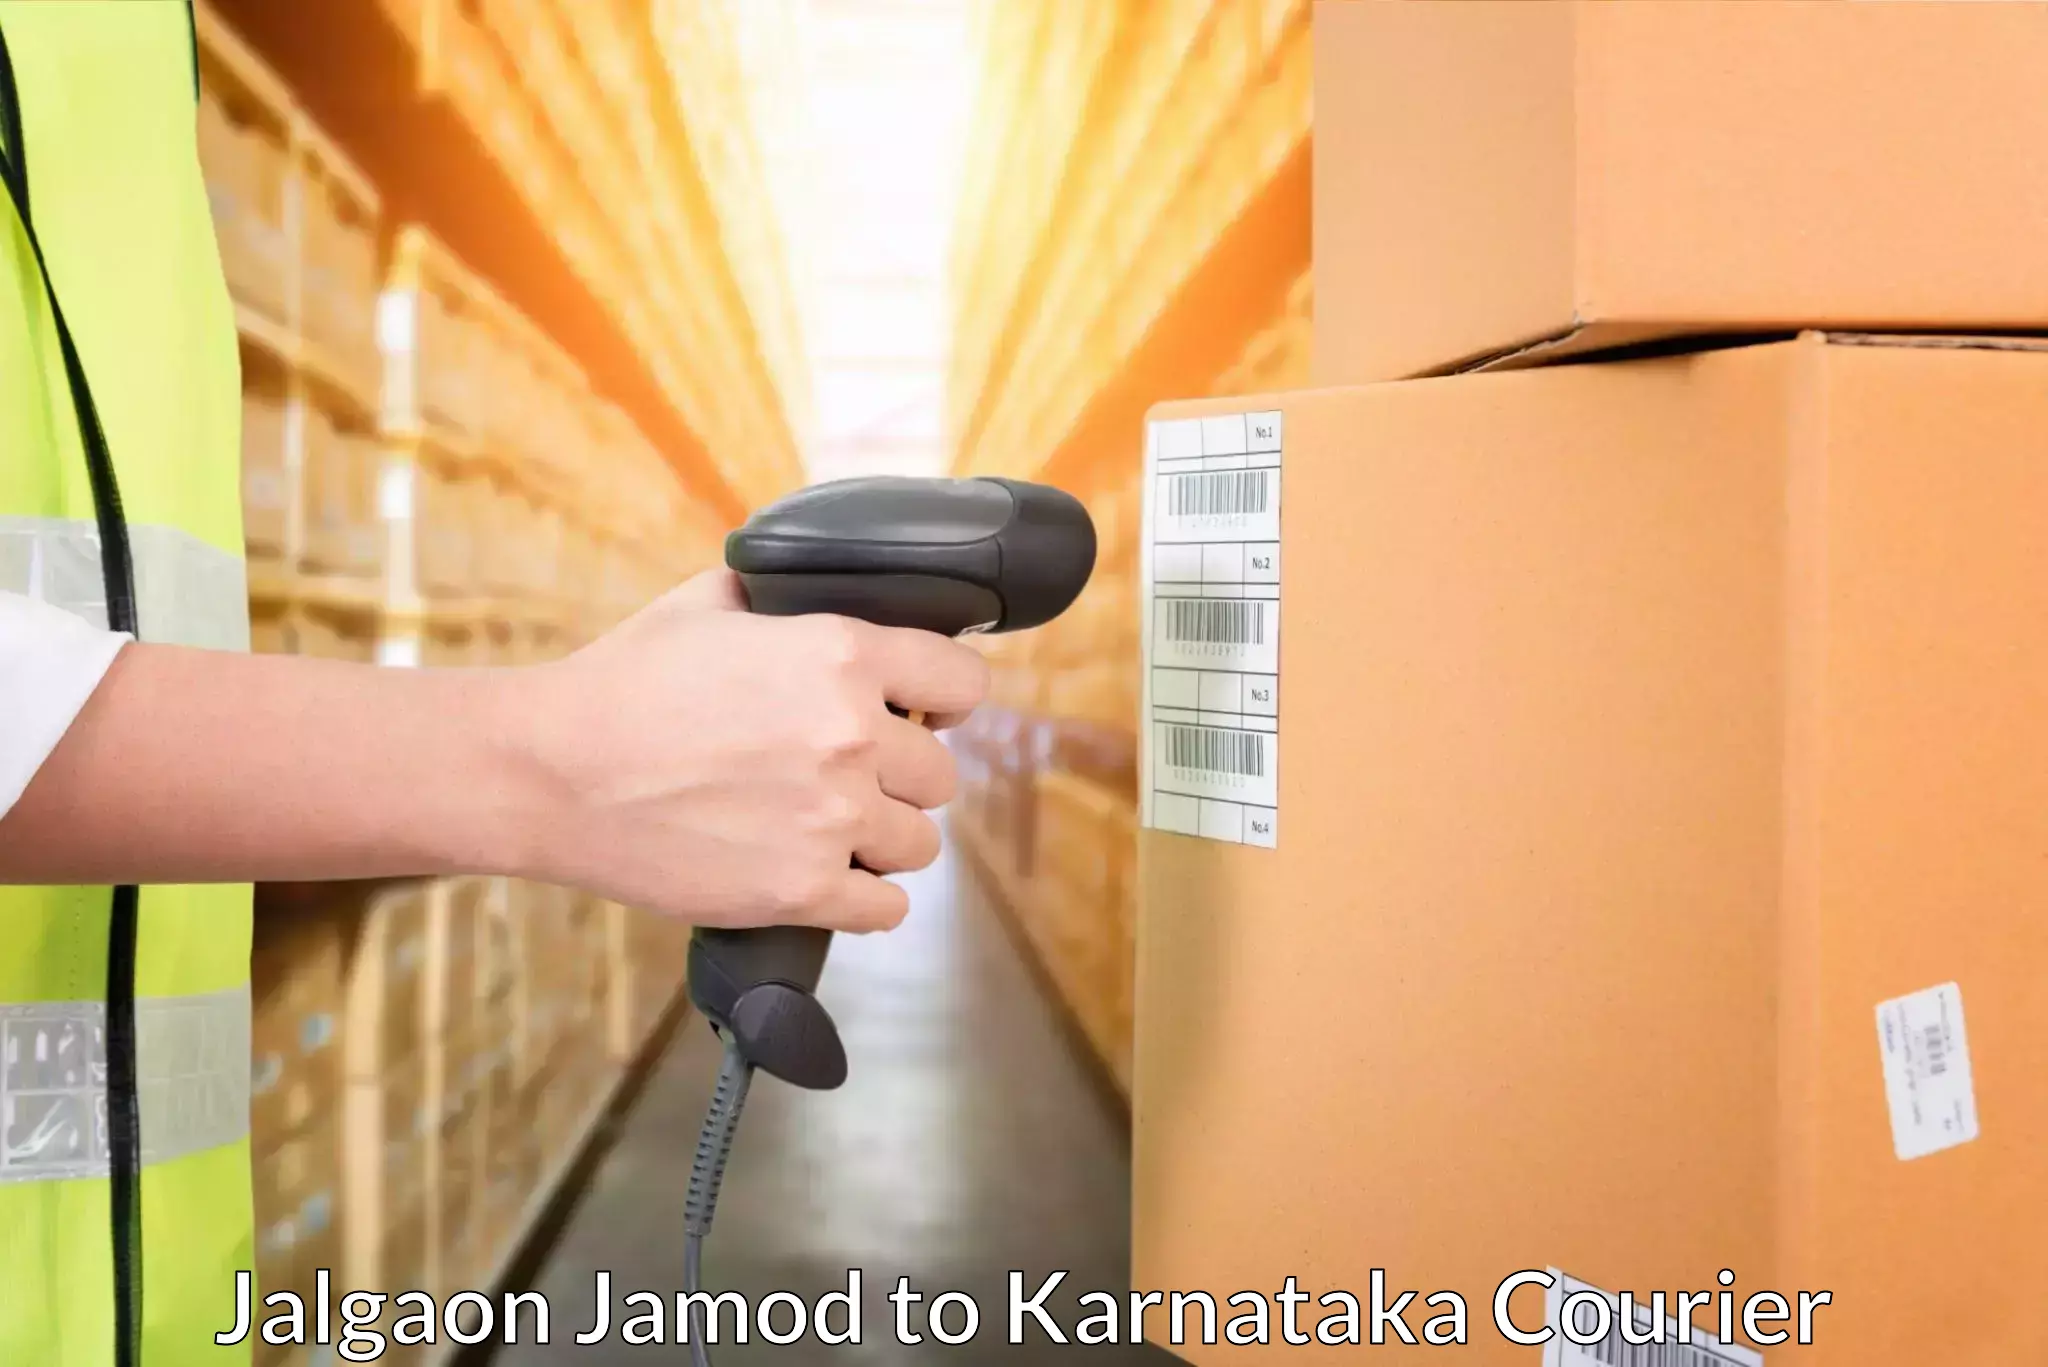 Local delivery service Jalgaon Jamod to Madhugiri